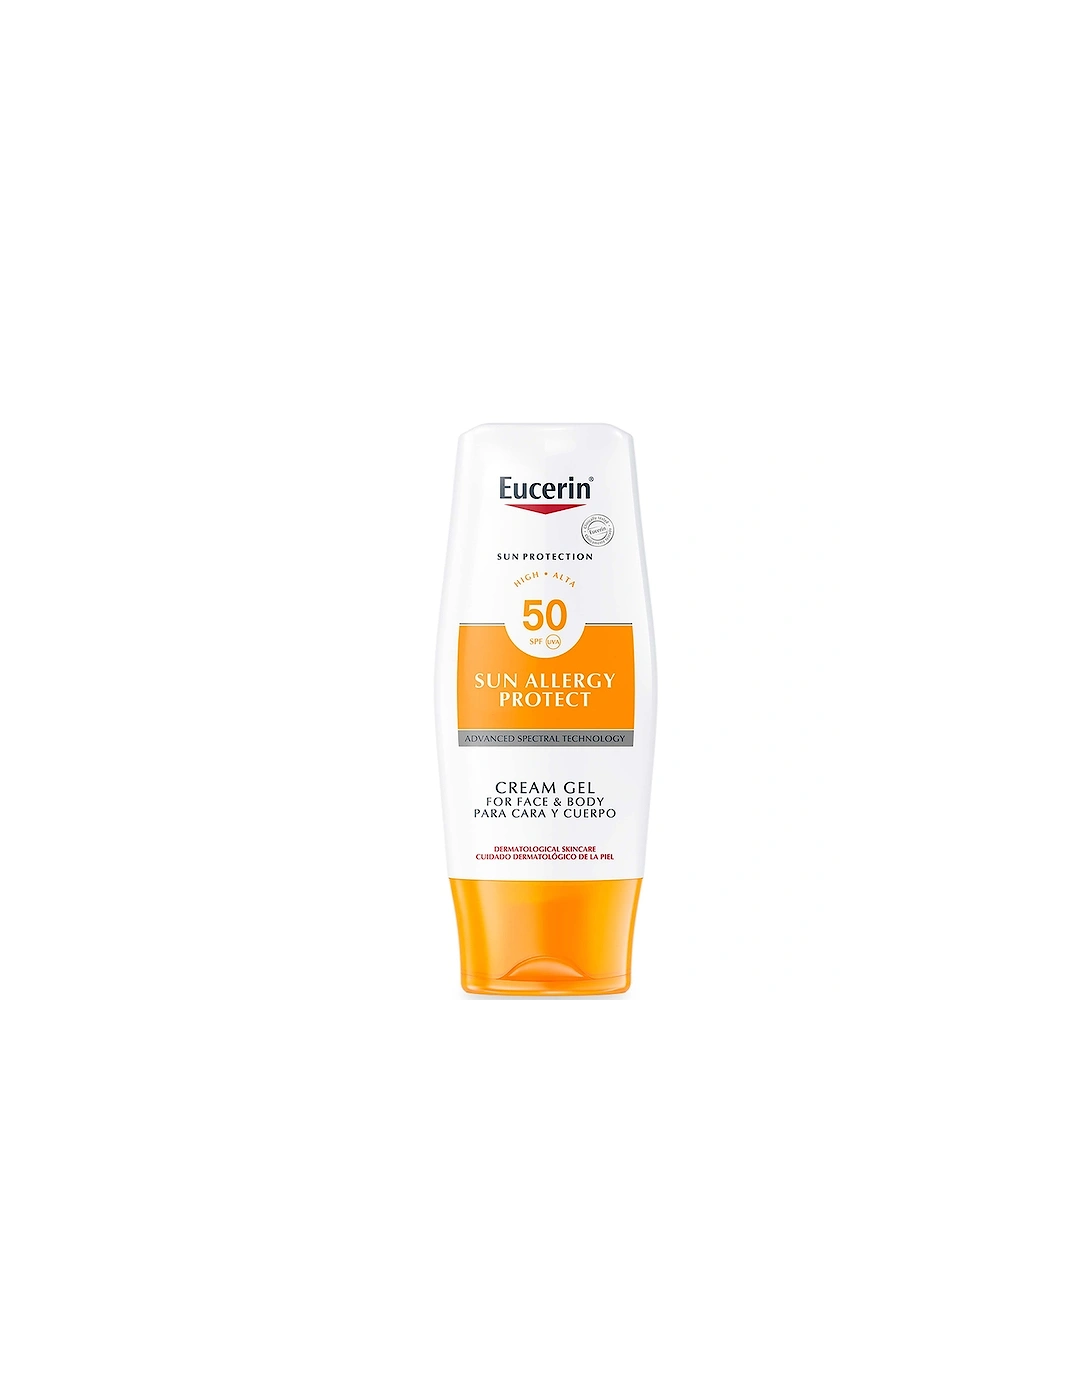 Sun Allergy Protect Sun Crème Gel SPF50 150ml - Eucerin, 2 of 1